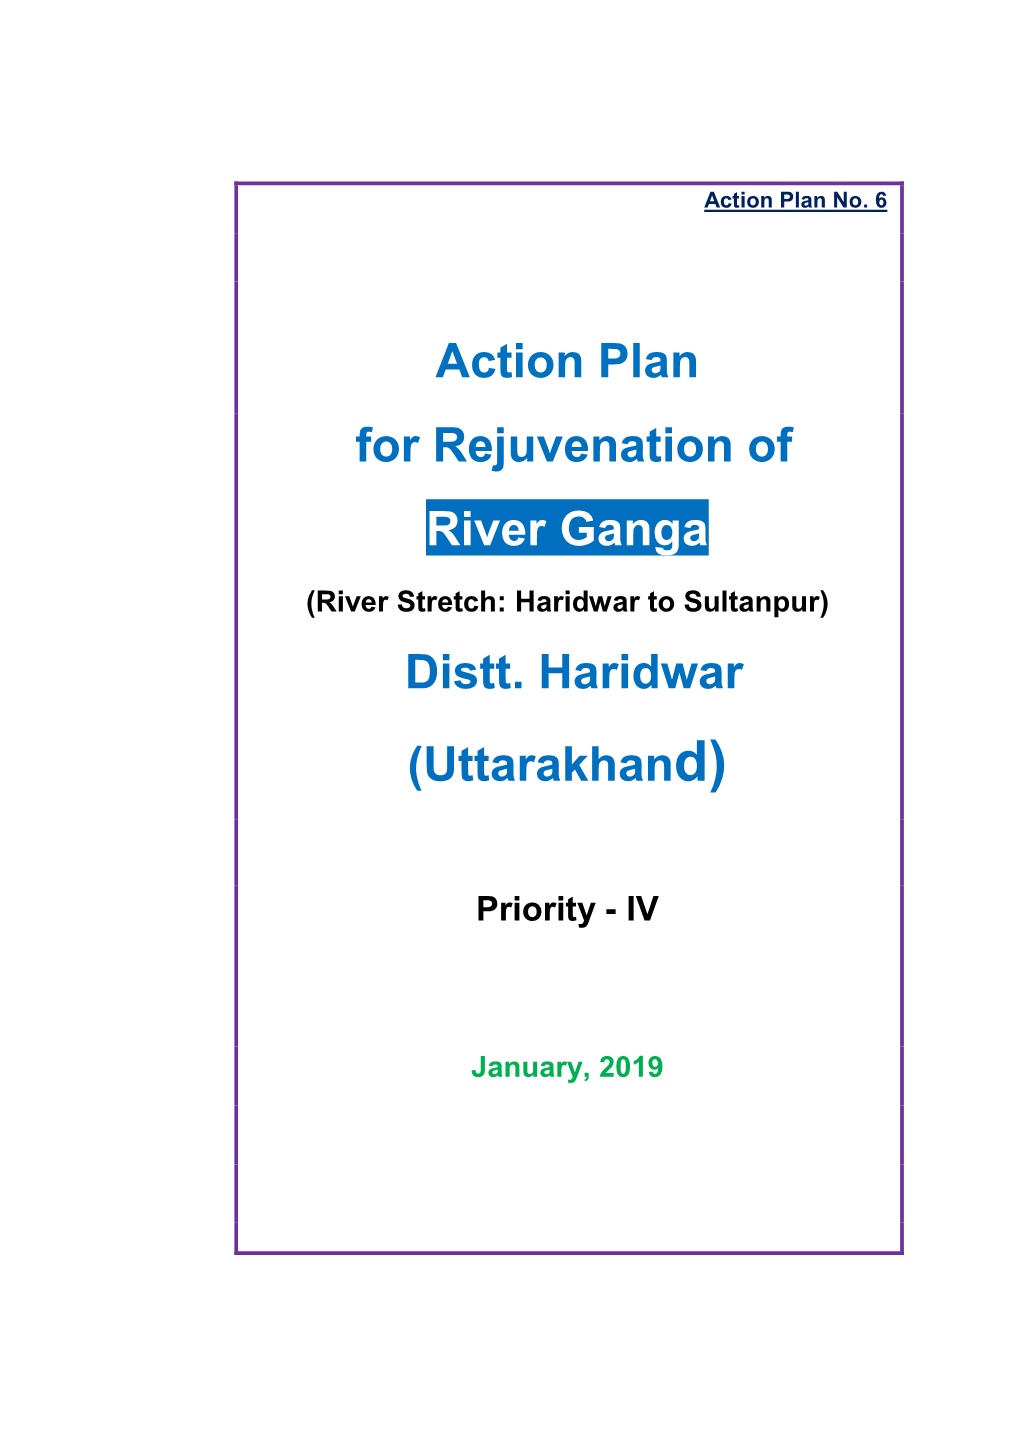 Action Plan for Rejuvenation of River Ganga Distt. Haridwar